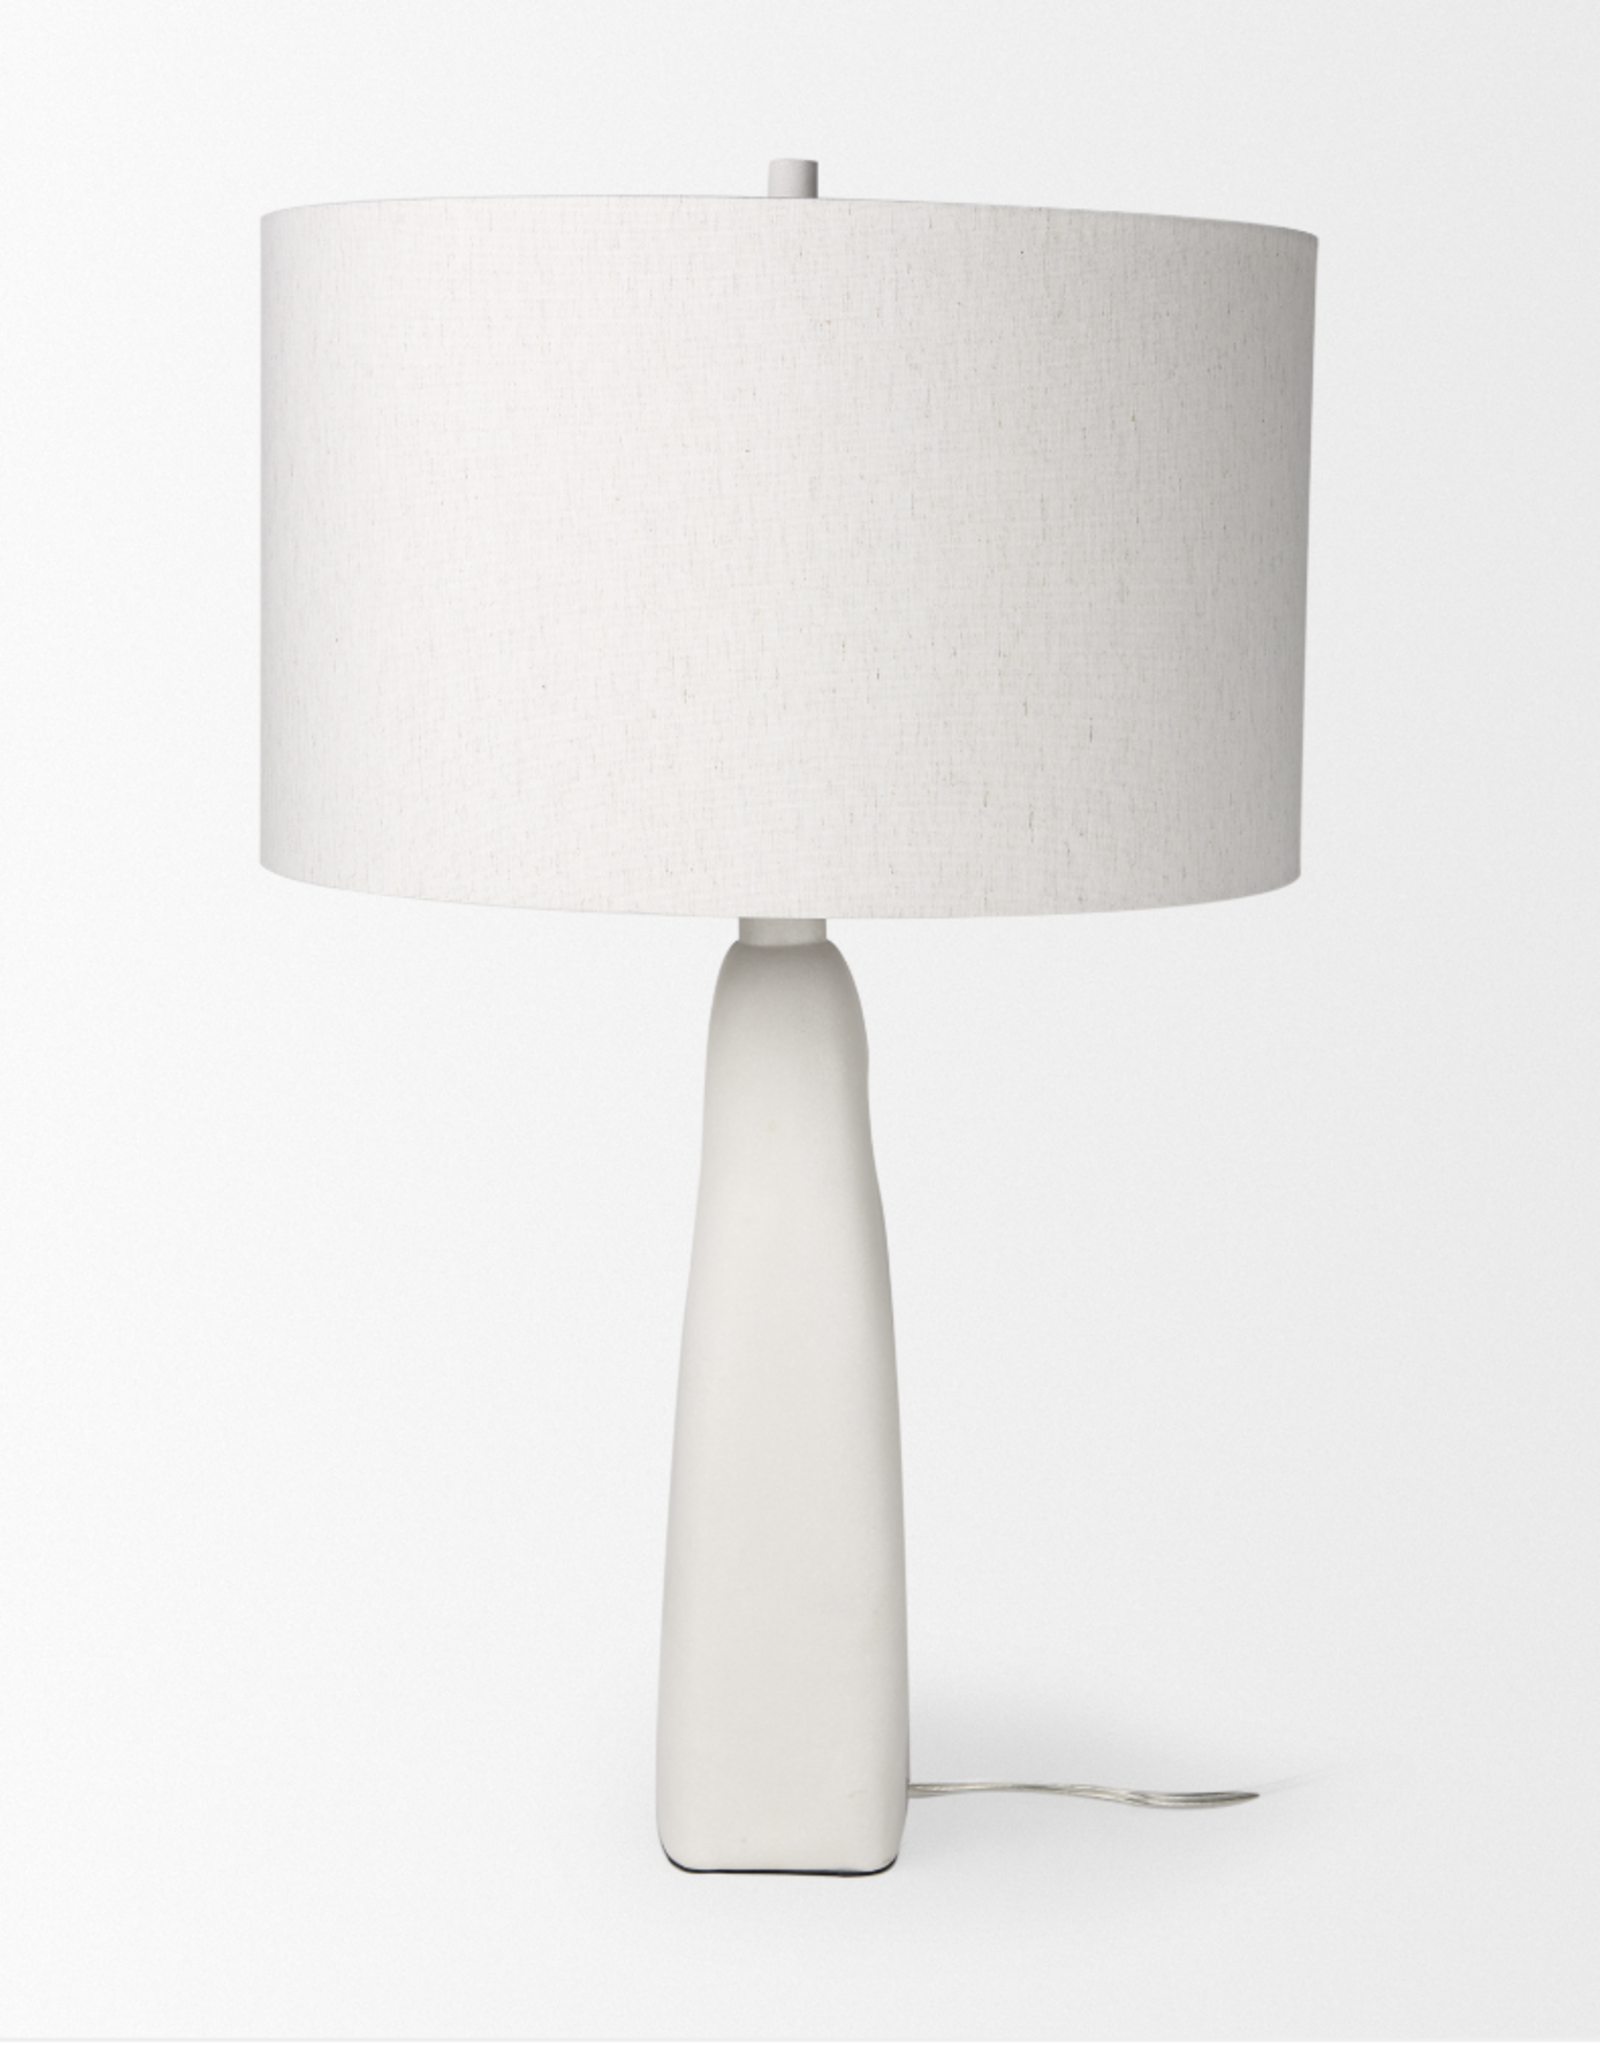 Tao Table Lamp